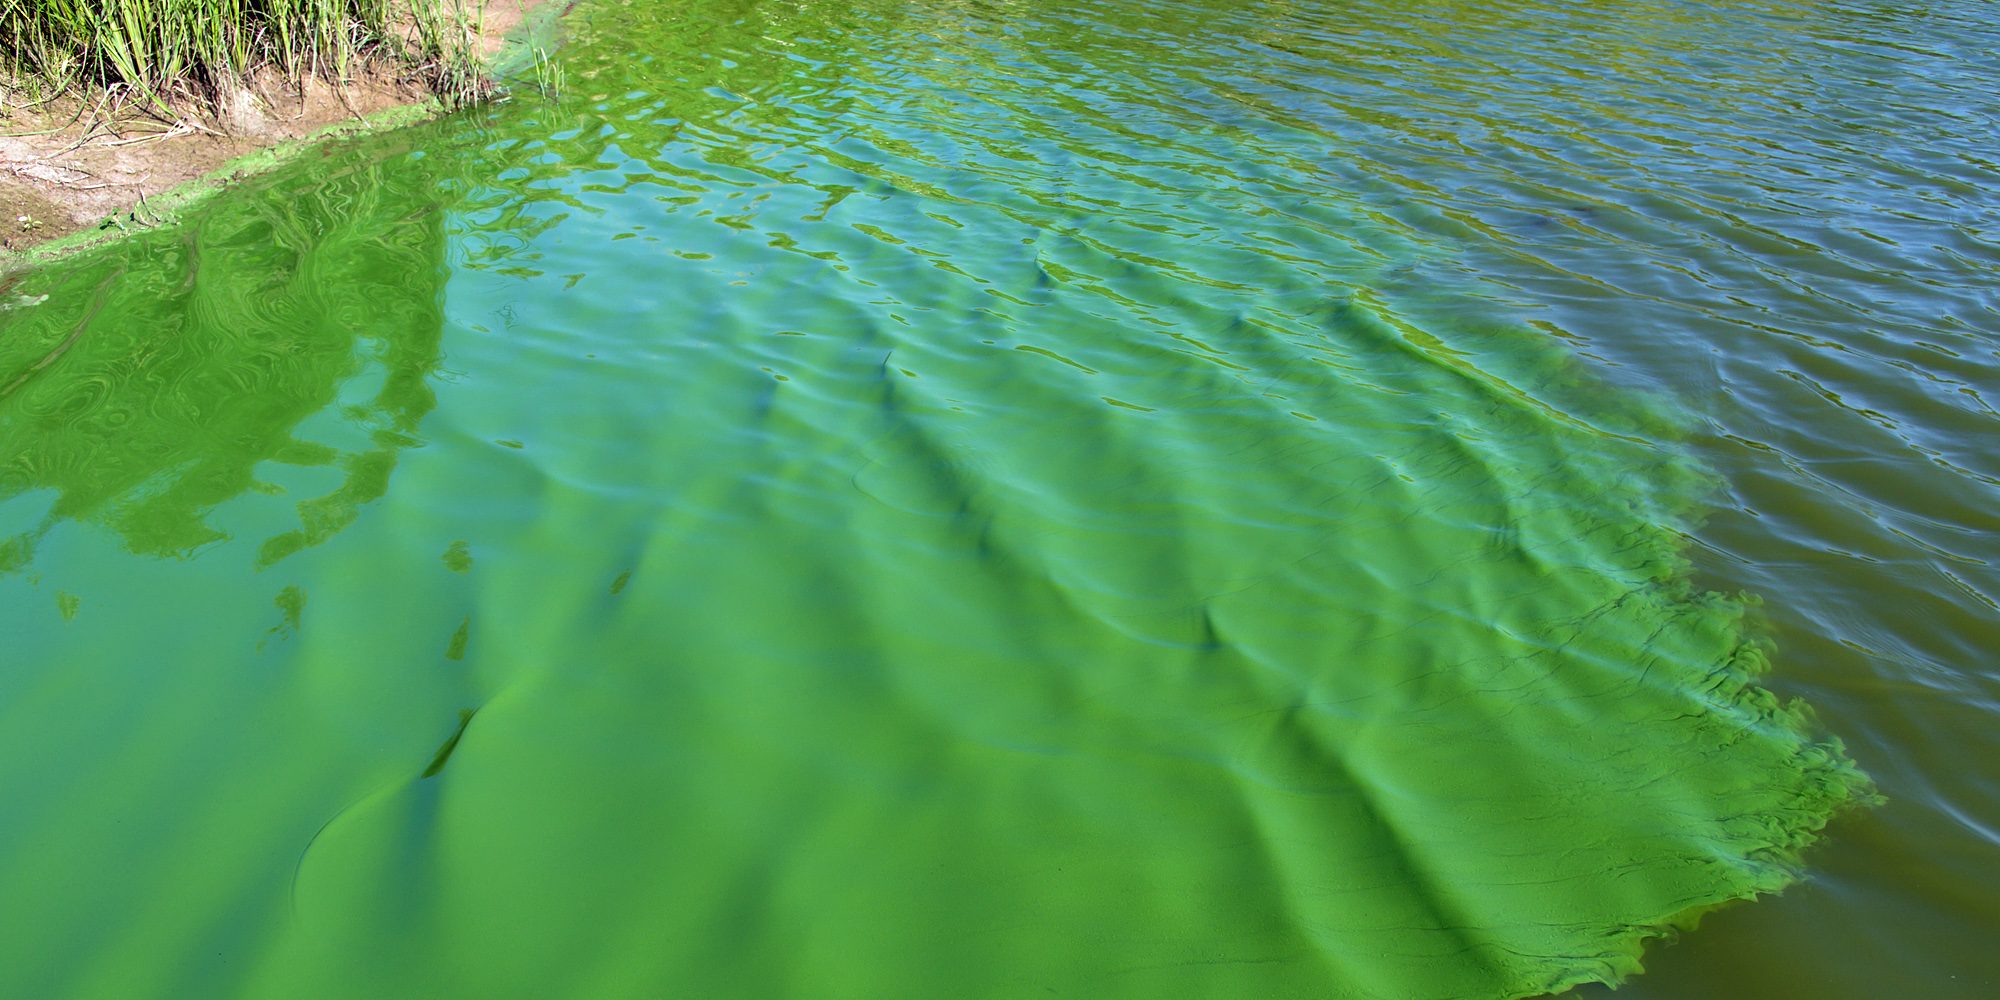 Discovery of smelly toxin-producing algae closes Hamilton's Pier 4 public beach